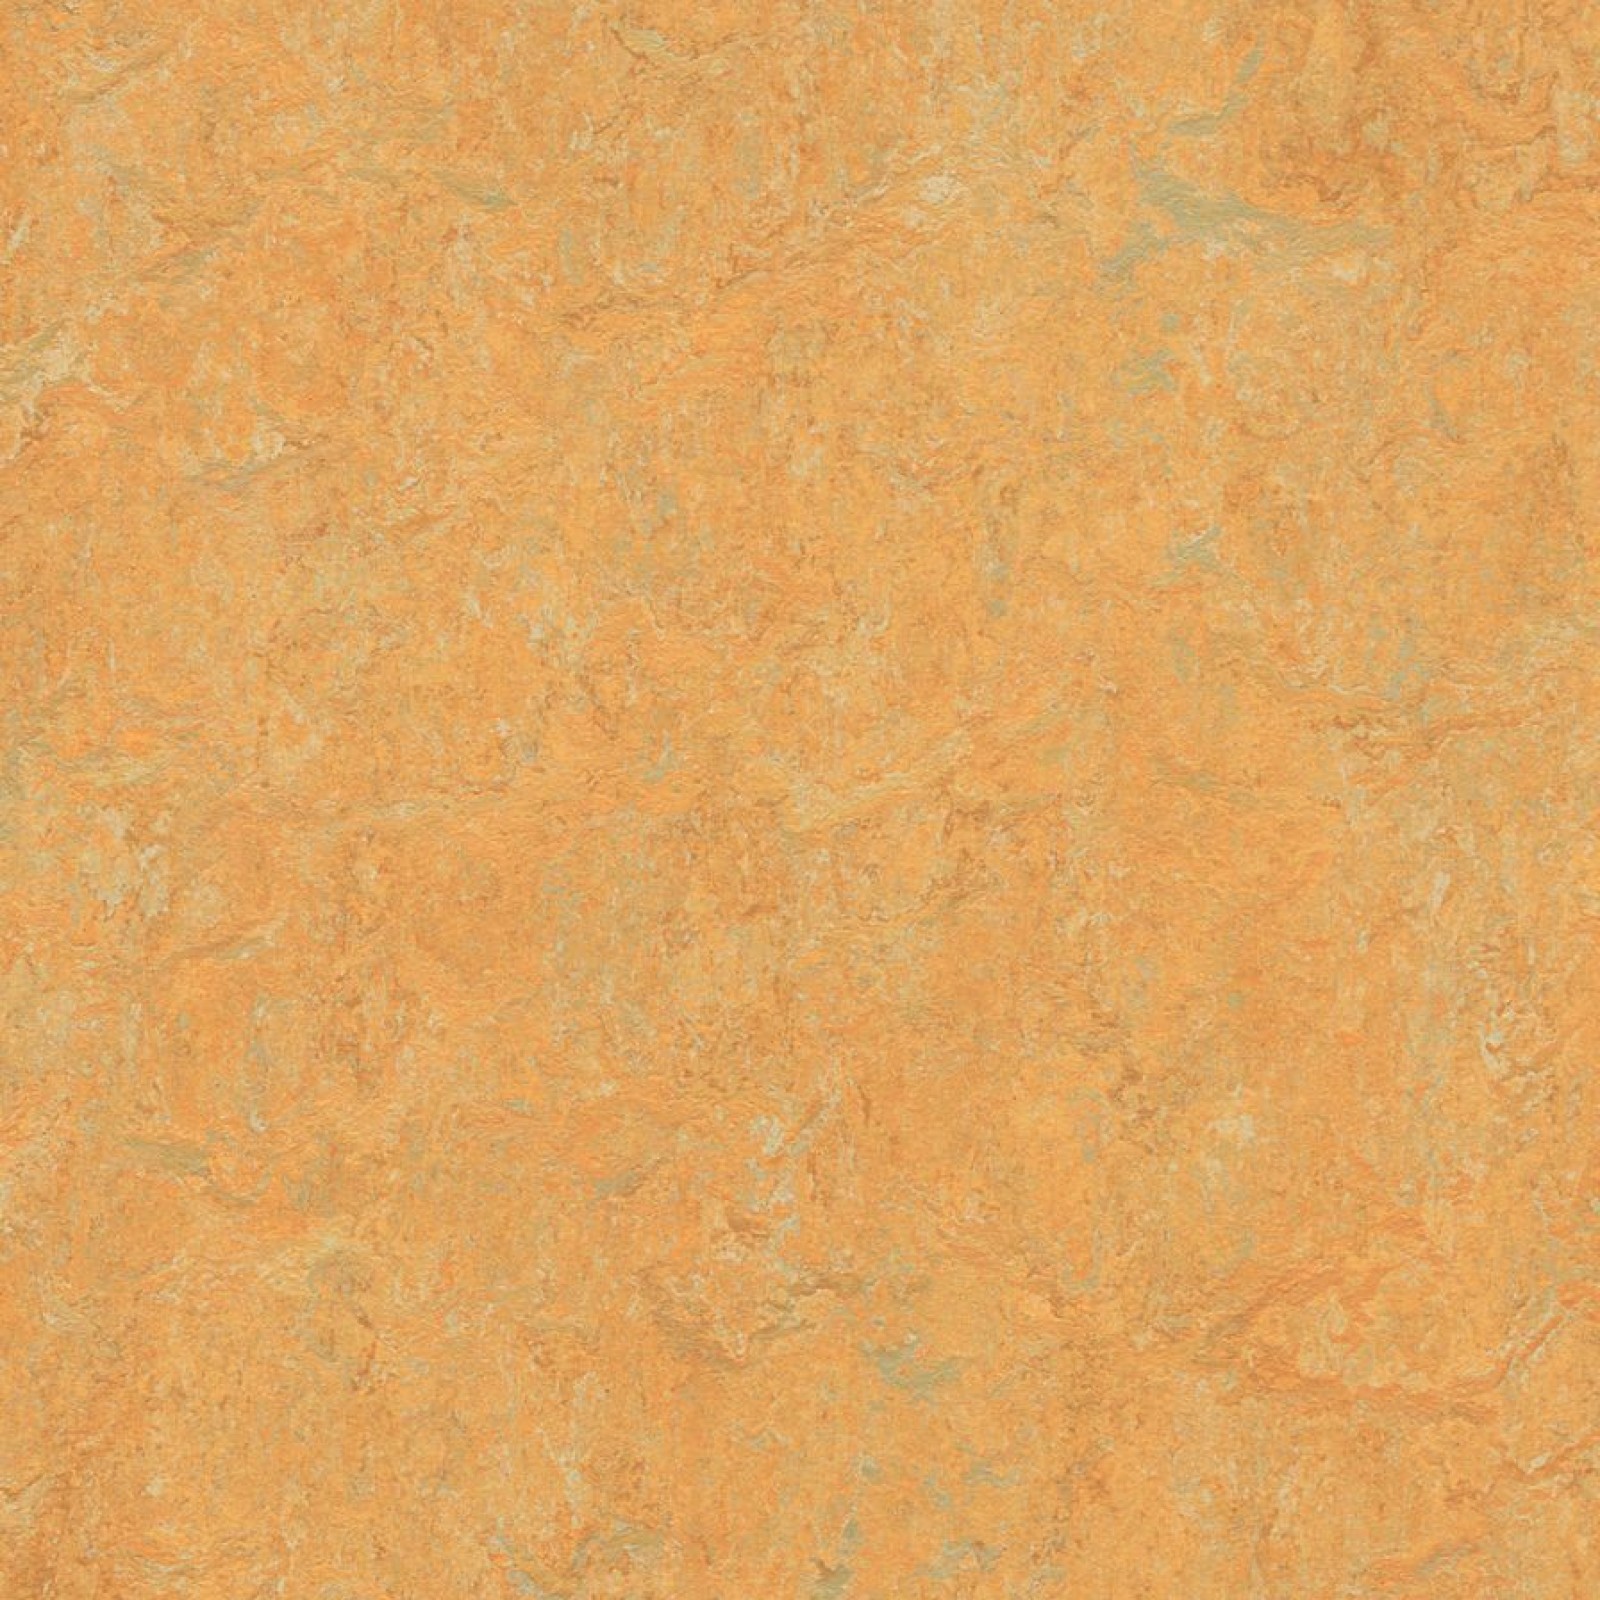 Vzor - 3847 golden saffron